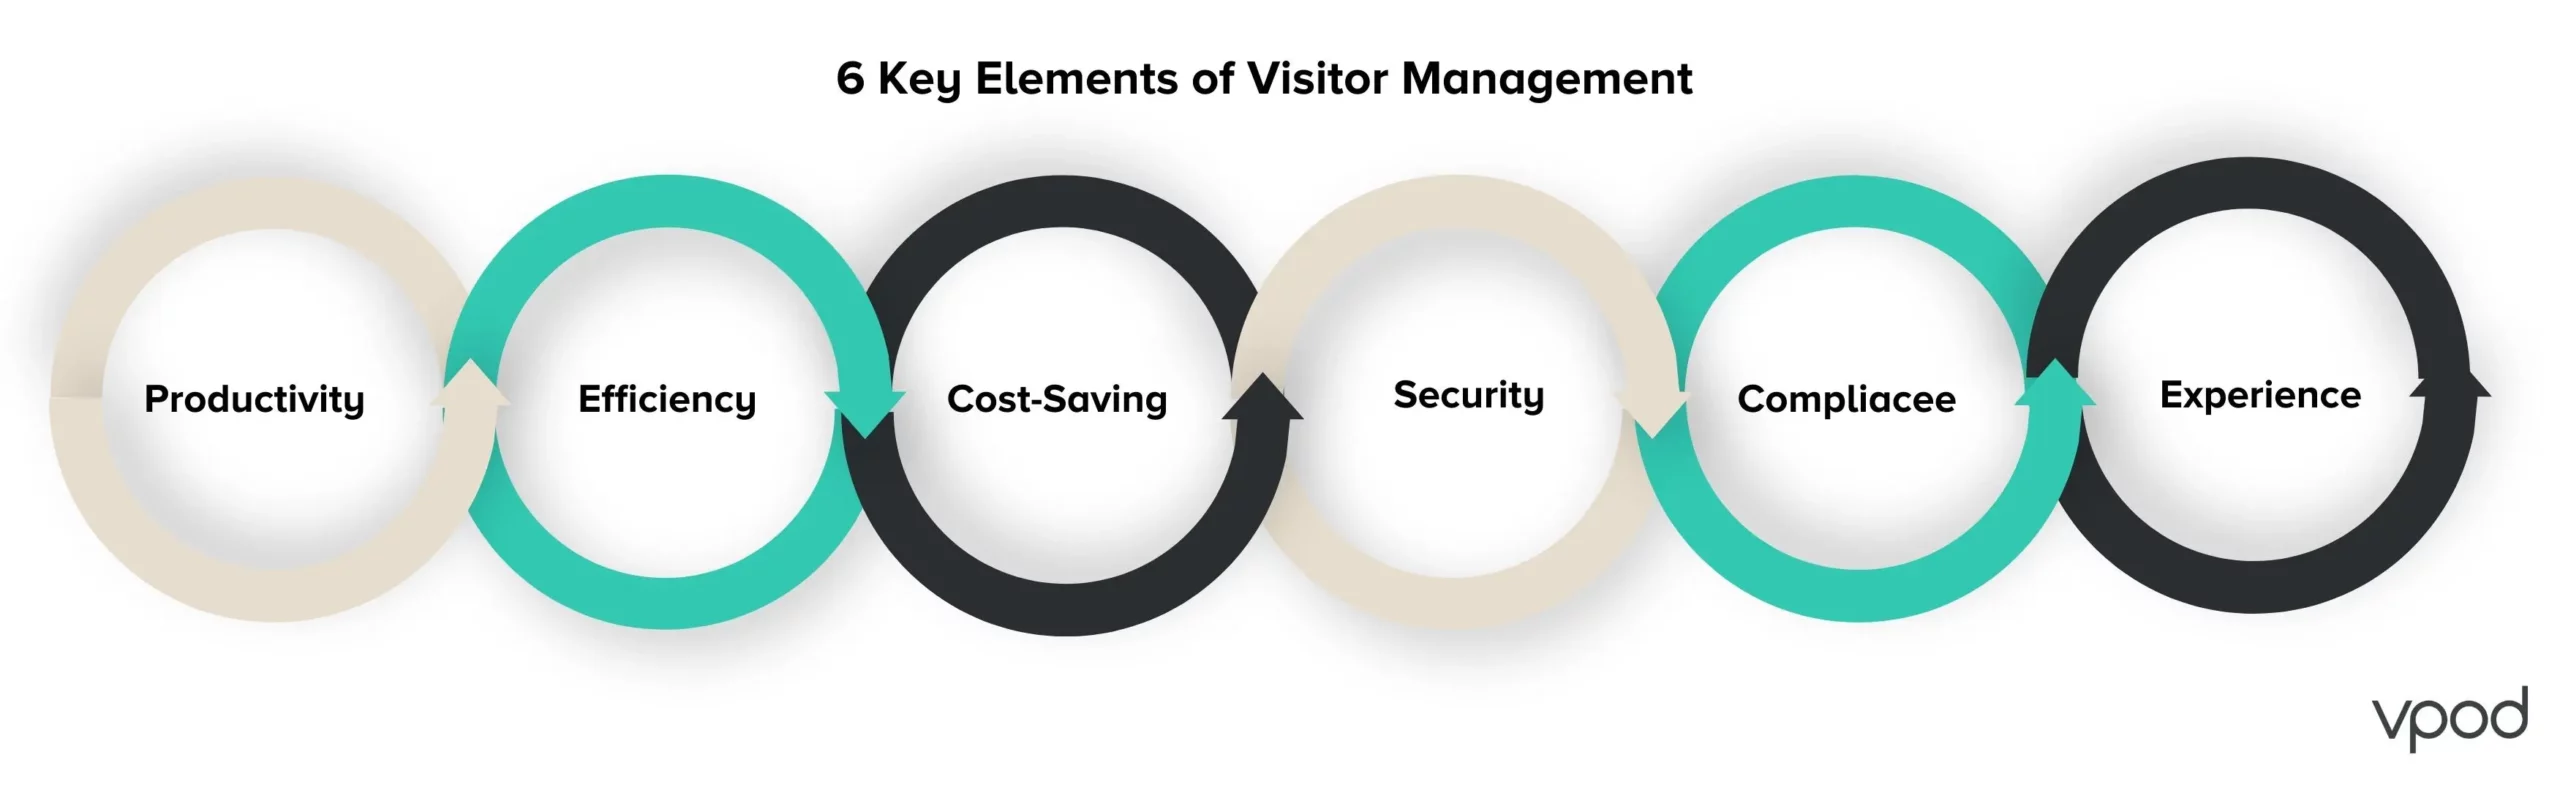 key-elements-of-visitor-management